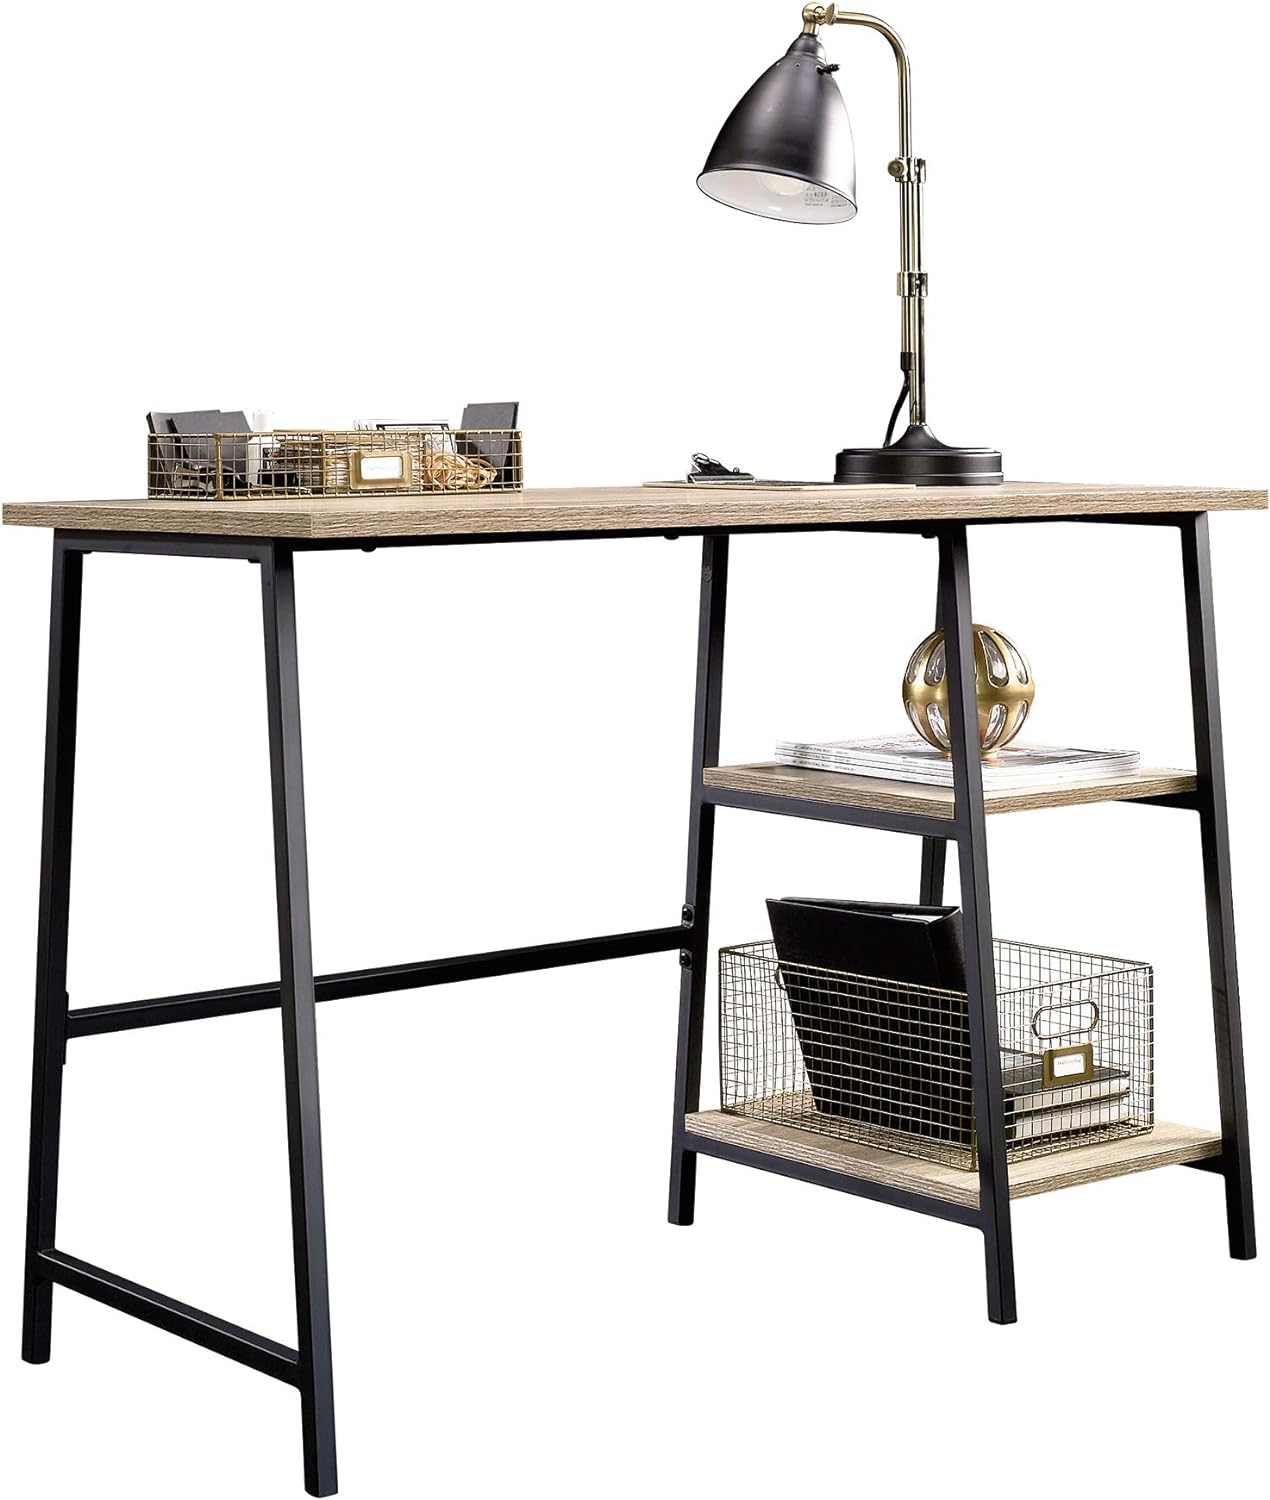 North Avenue Single Pedestal Desk With Shelves Charter Oak Finish